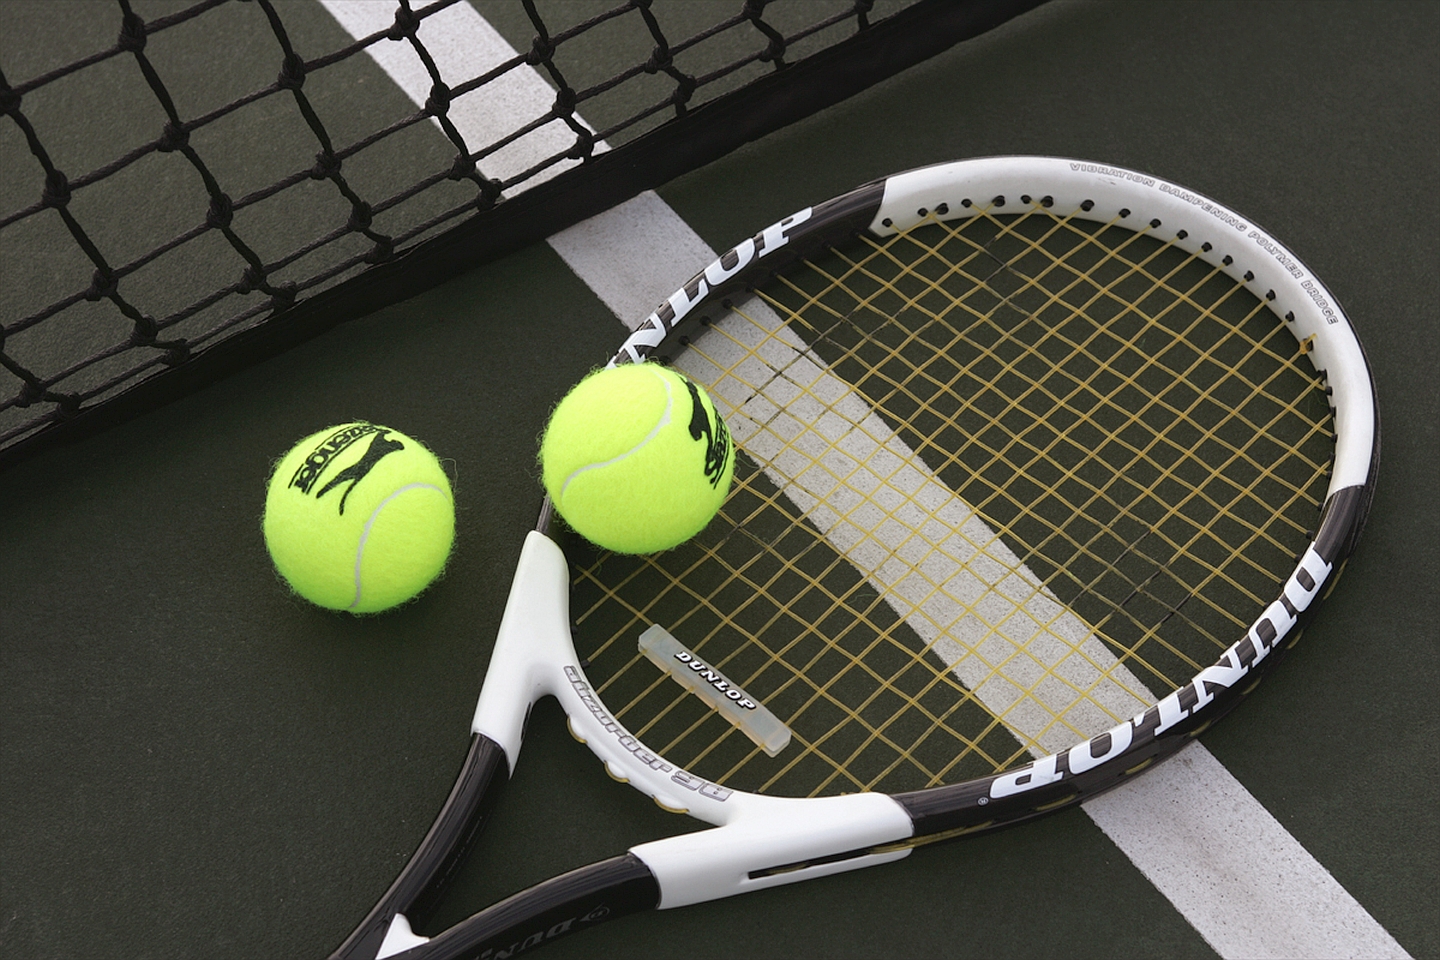 fond d'écran tenis,tennis,raquette,raquette de tennis,accessoire de raquette de tennis,sport de raquette